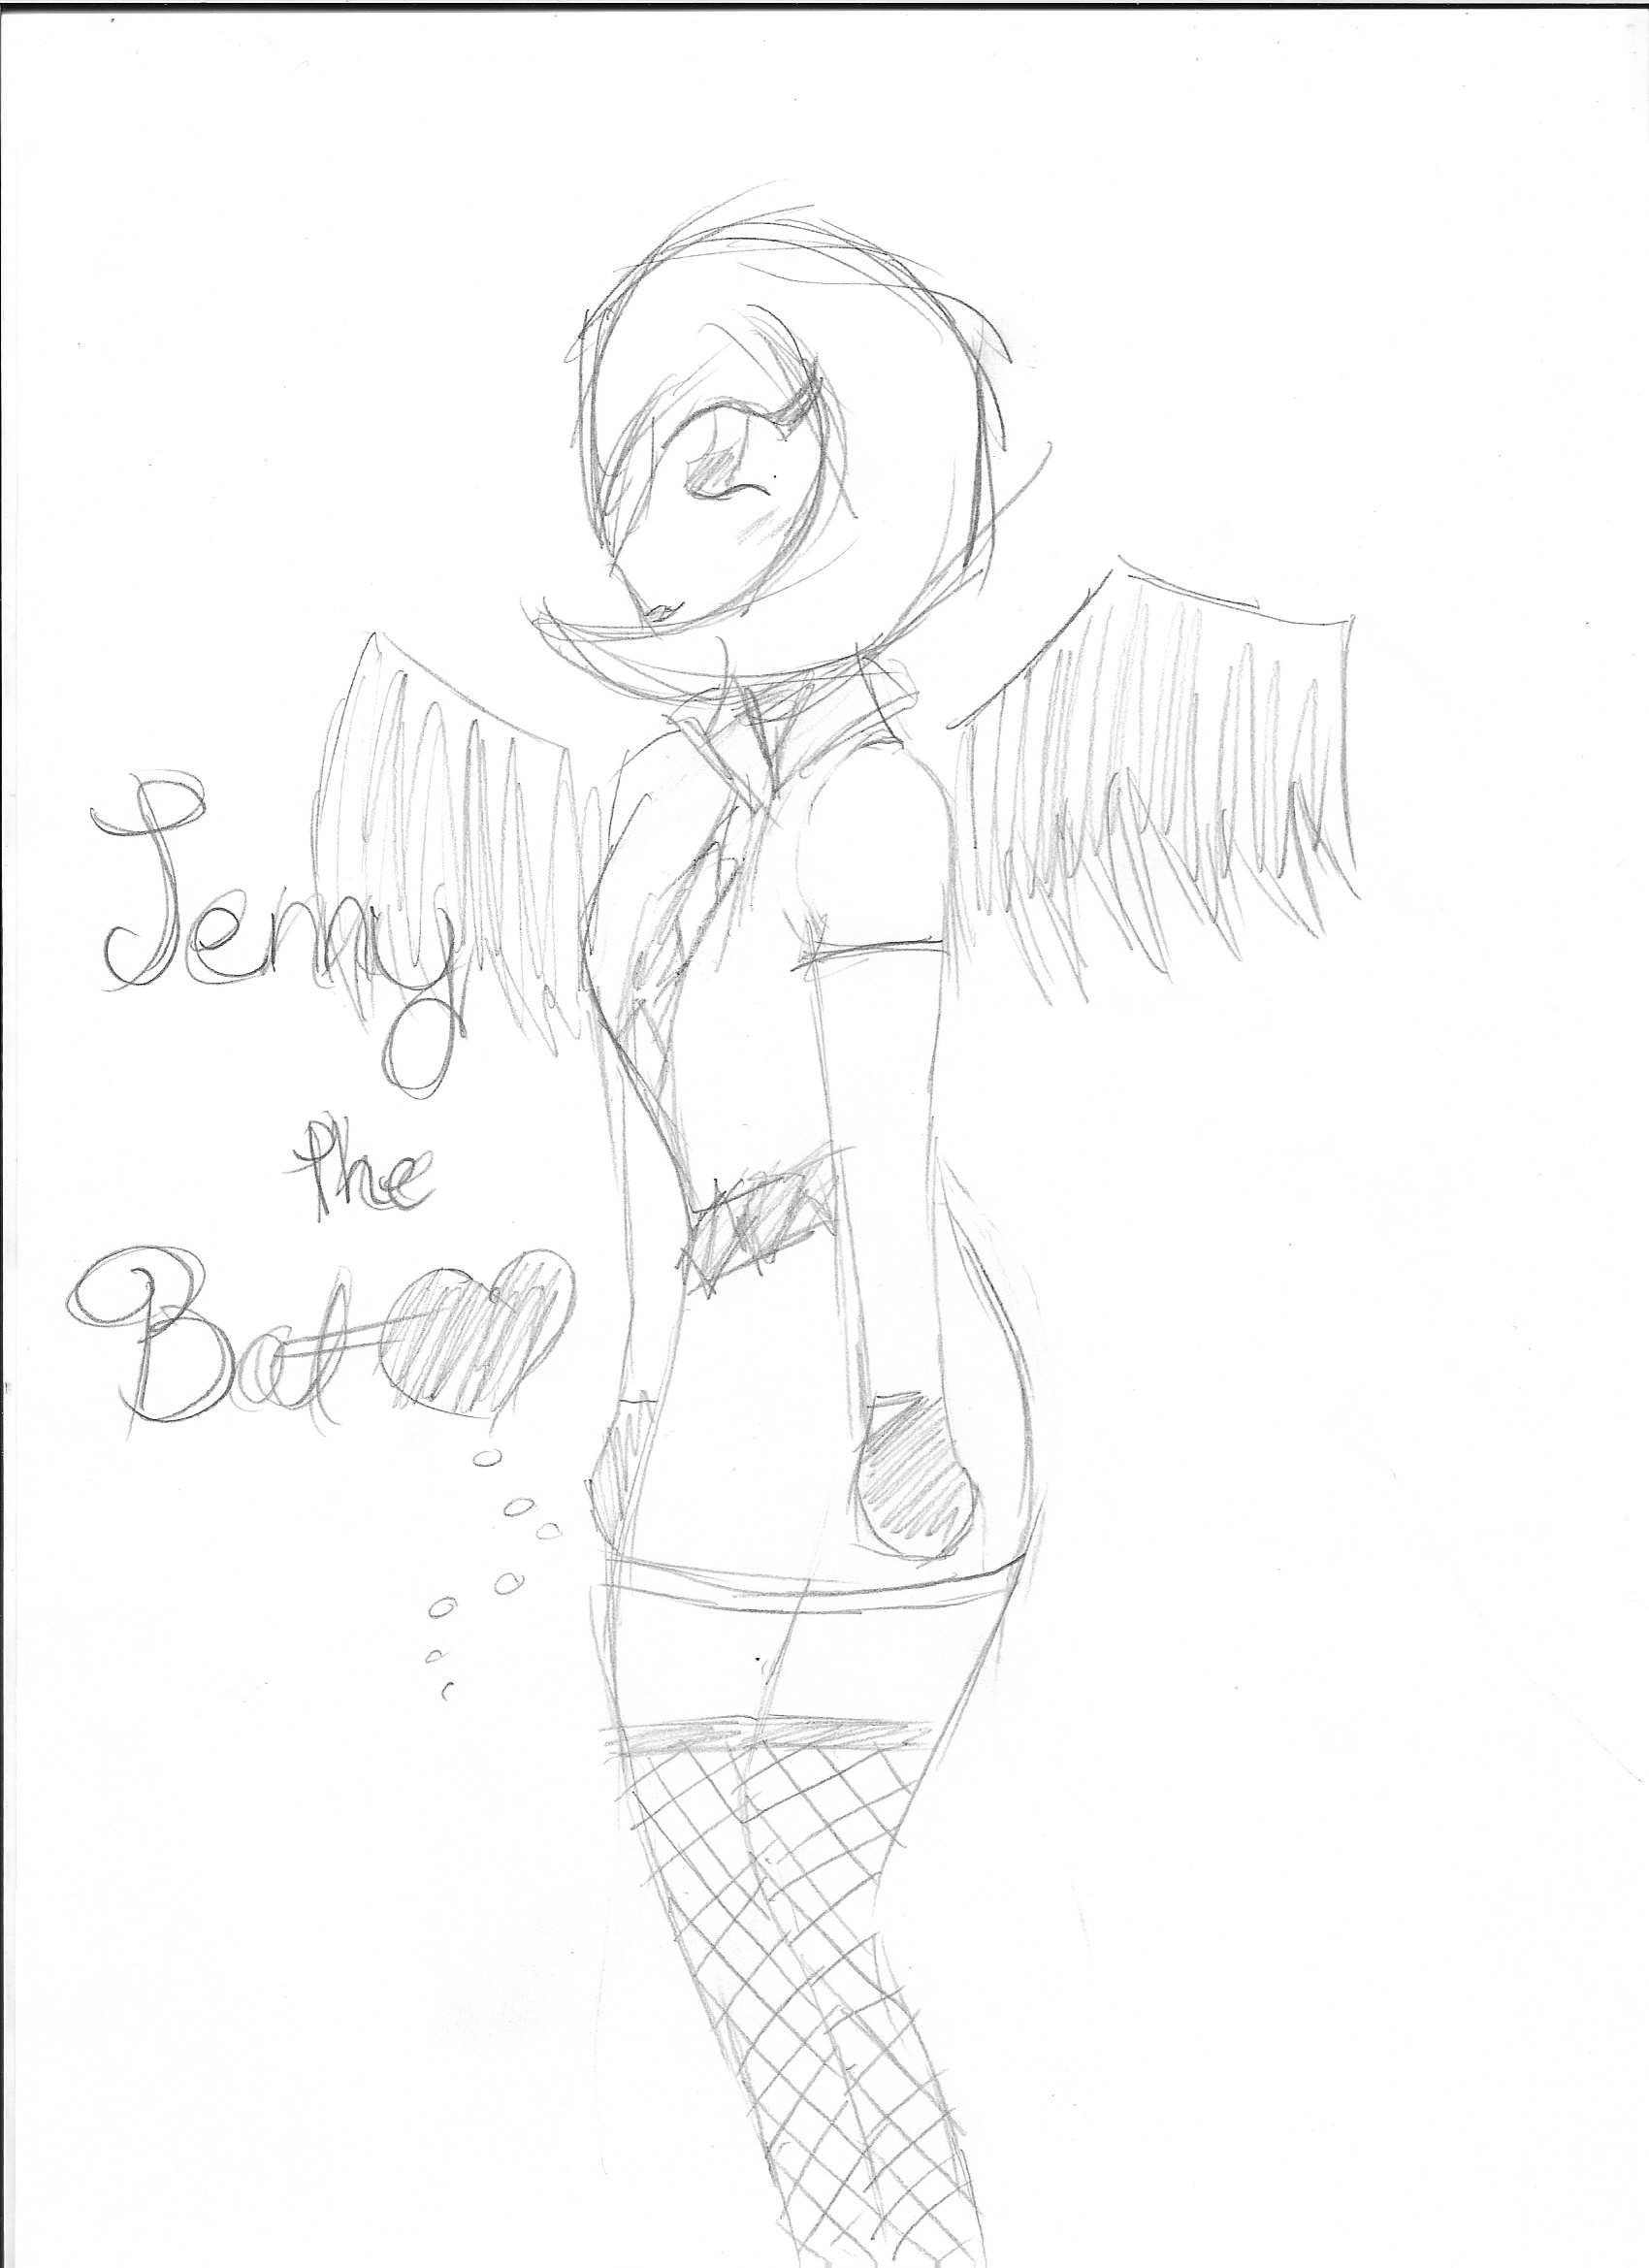 Jenny the Bat by Kimikoprincesspancho